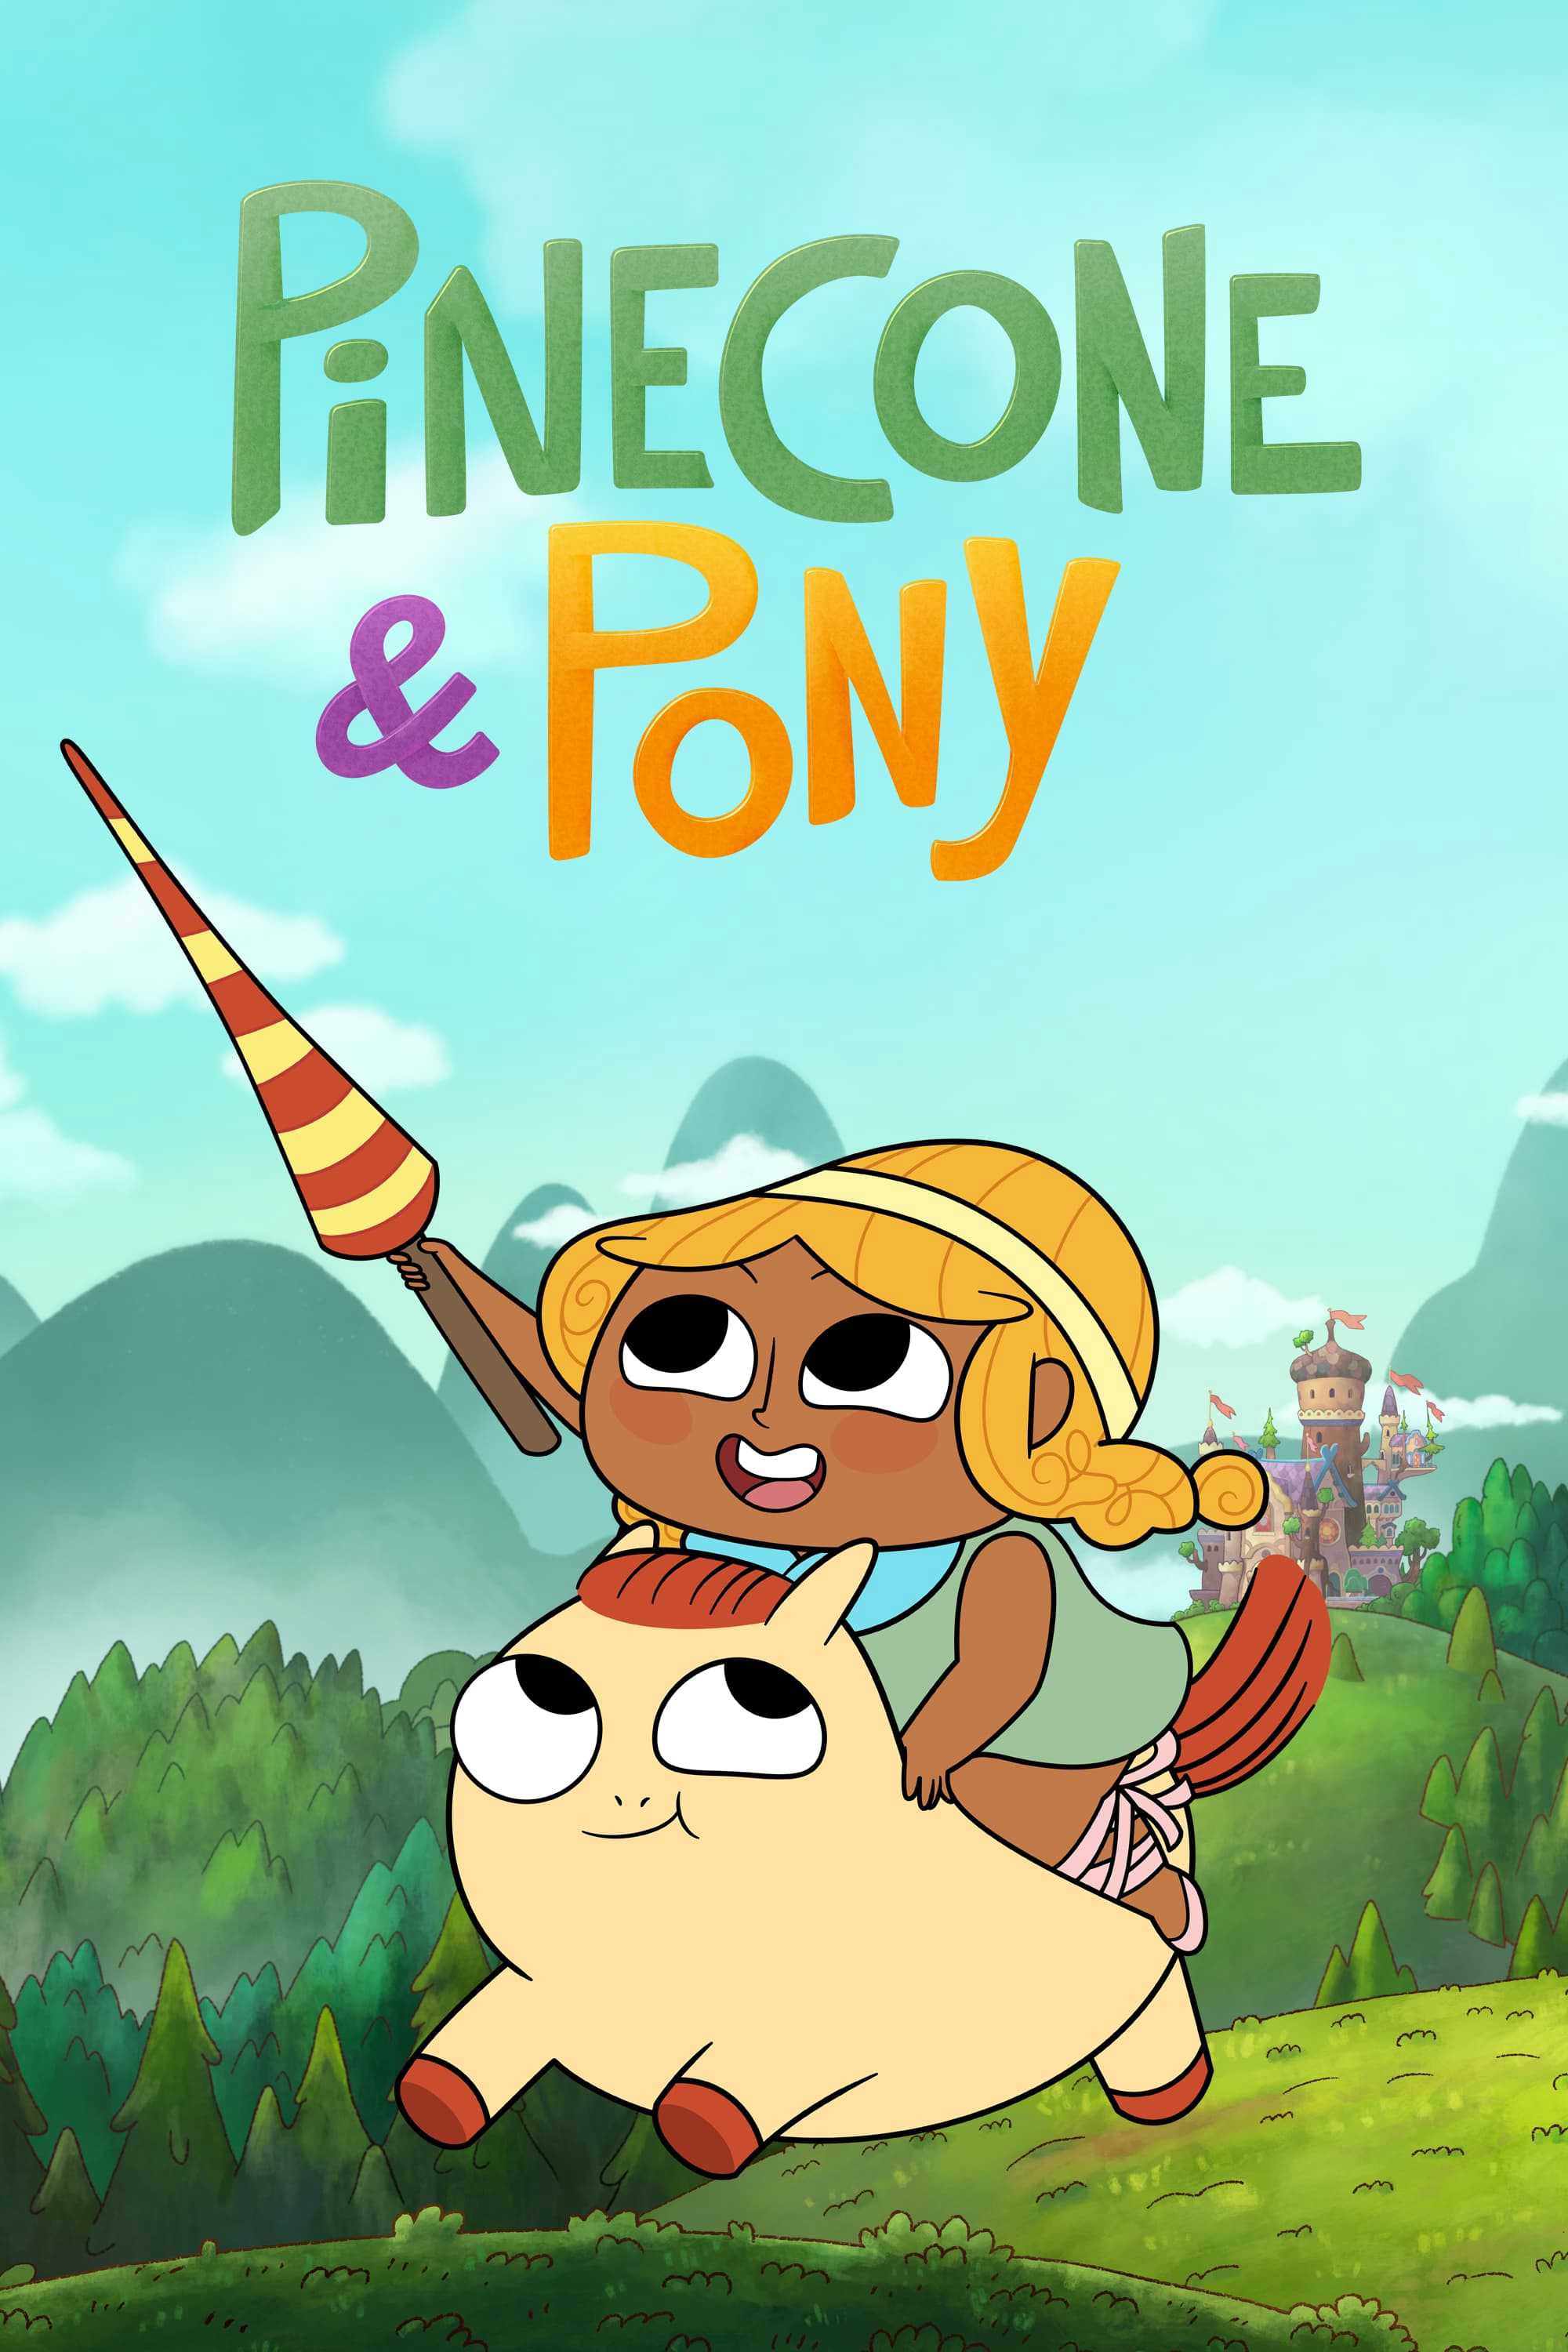 Pinecone & pony (phần 1) - Pinecone & pony (season 1)